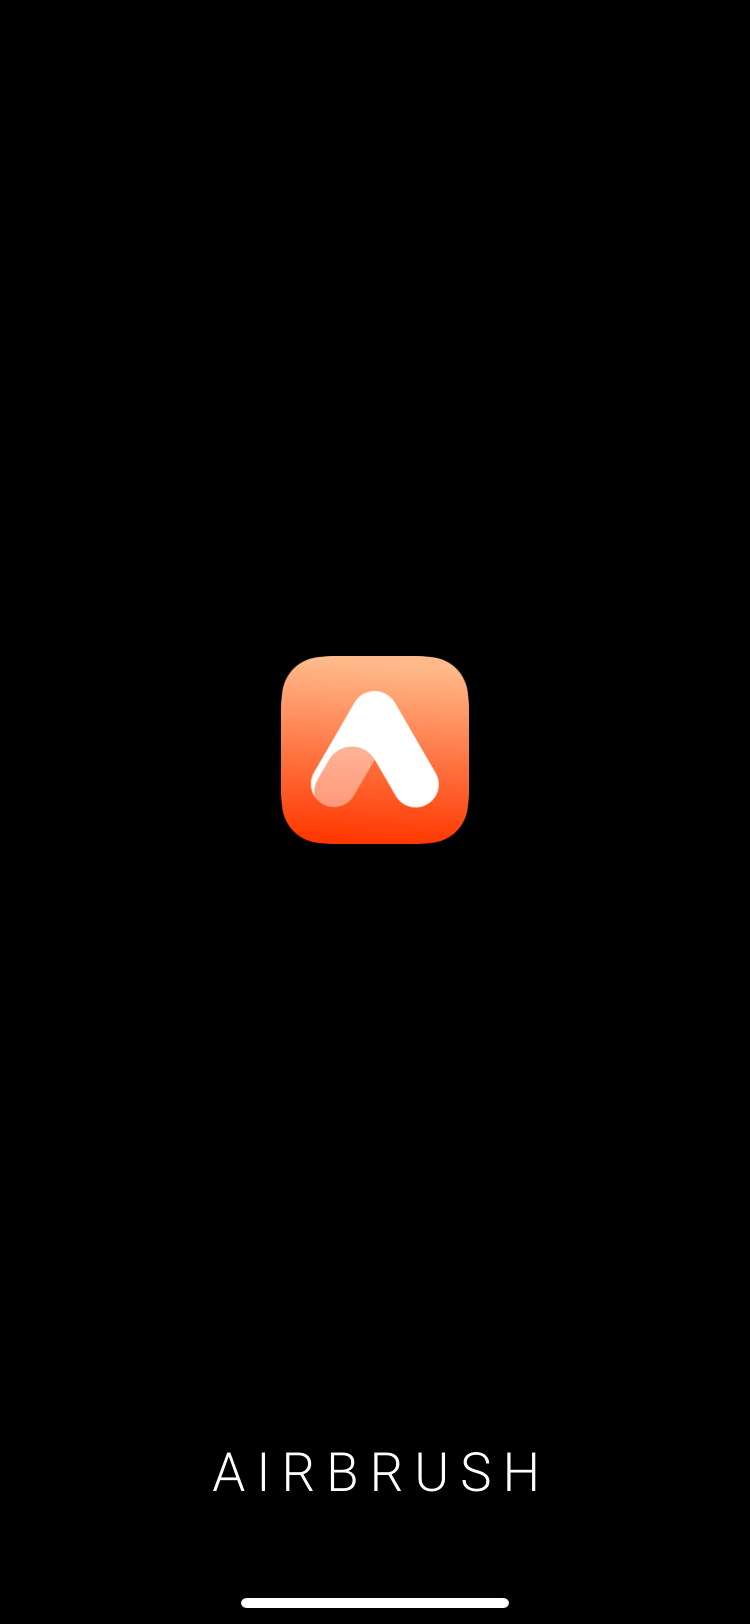 Airbrush startup page